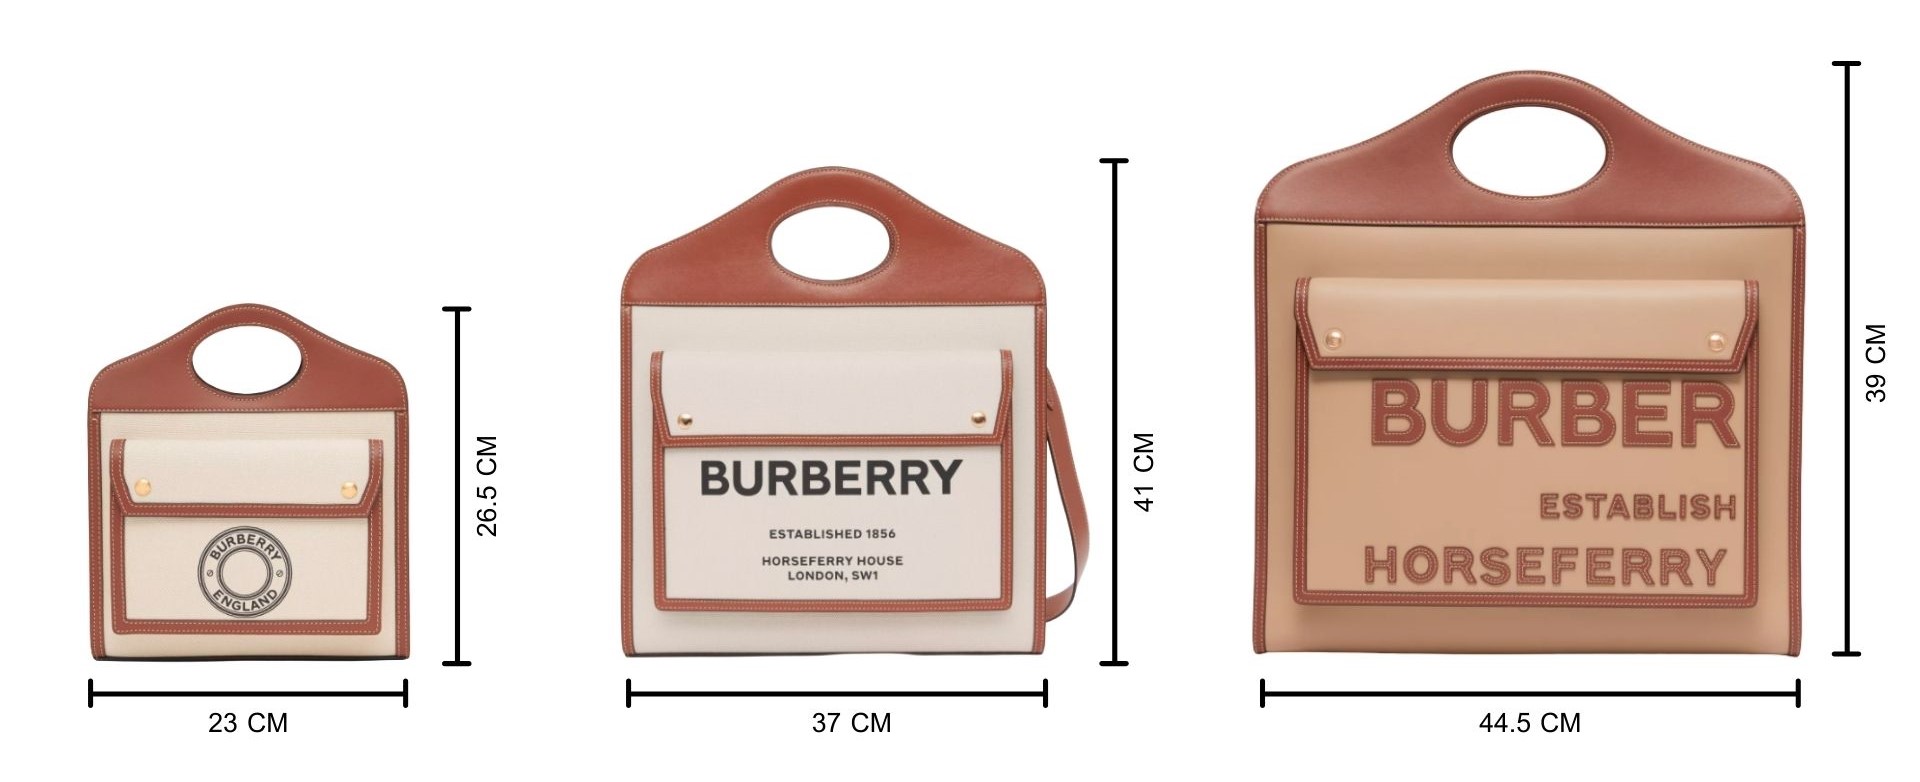 Size of Burberry Pocket Bag : ขนาดของกระเป๋า Anatomy Of Burberry Pocket Bag